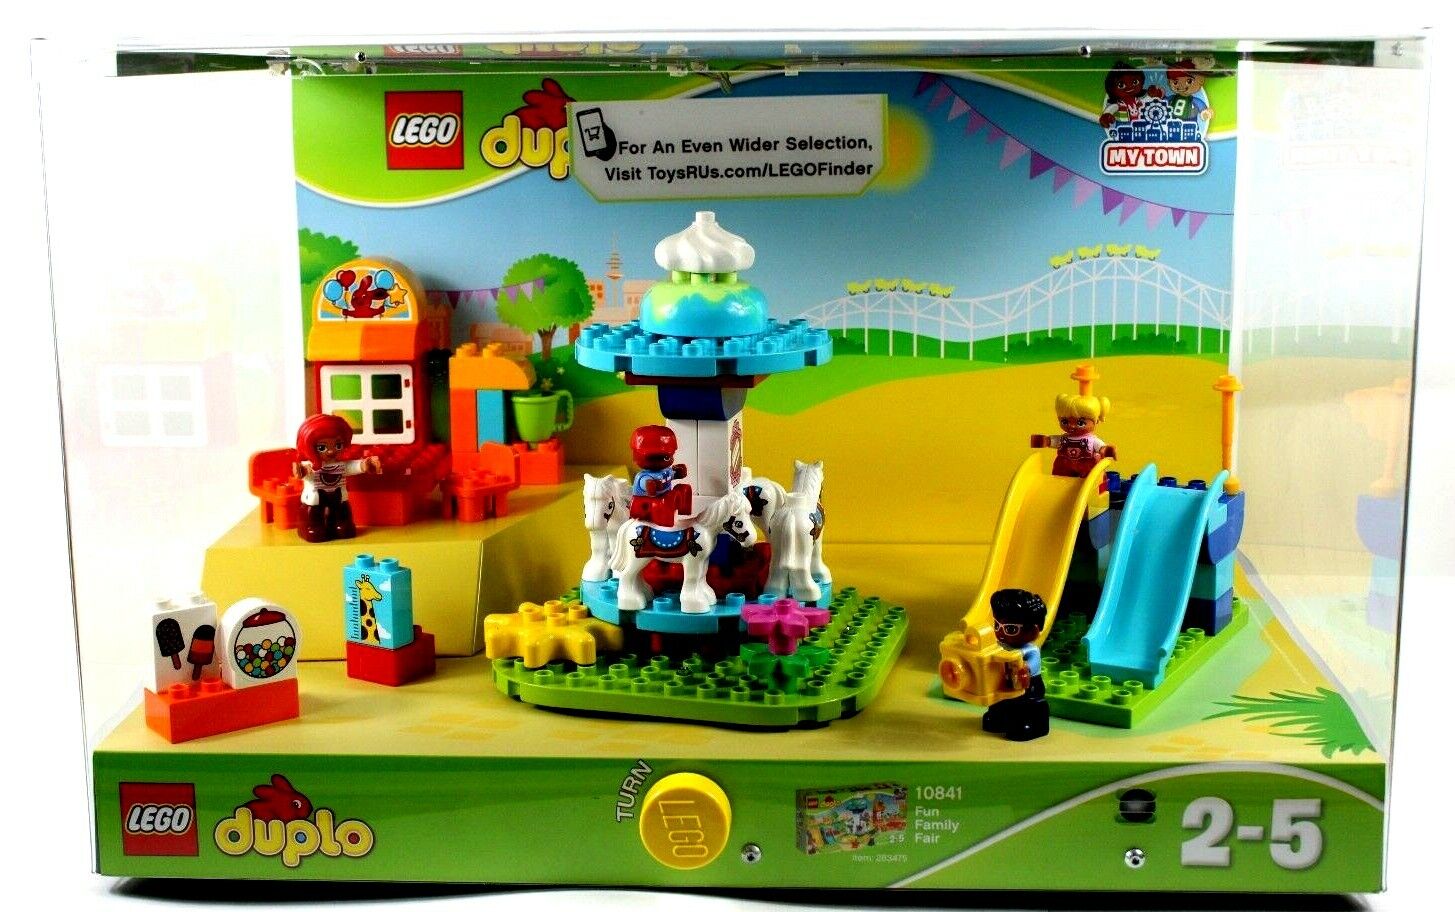 Toys R Us Exclusive LEGO Duplo My Town Fun Family Fair 10841 Retail Display Sign